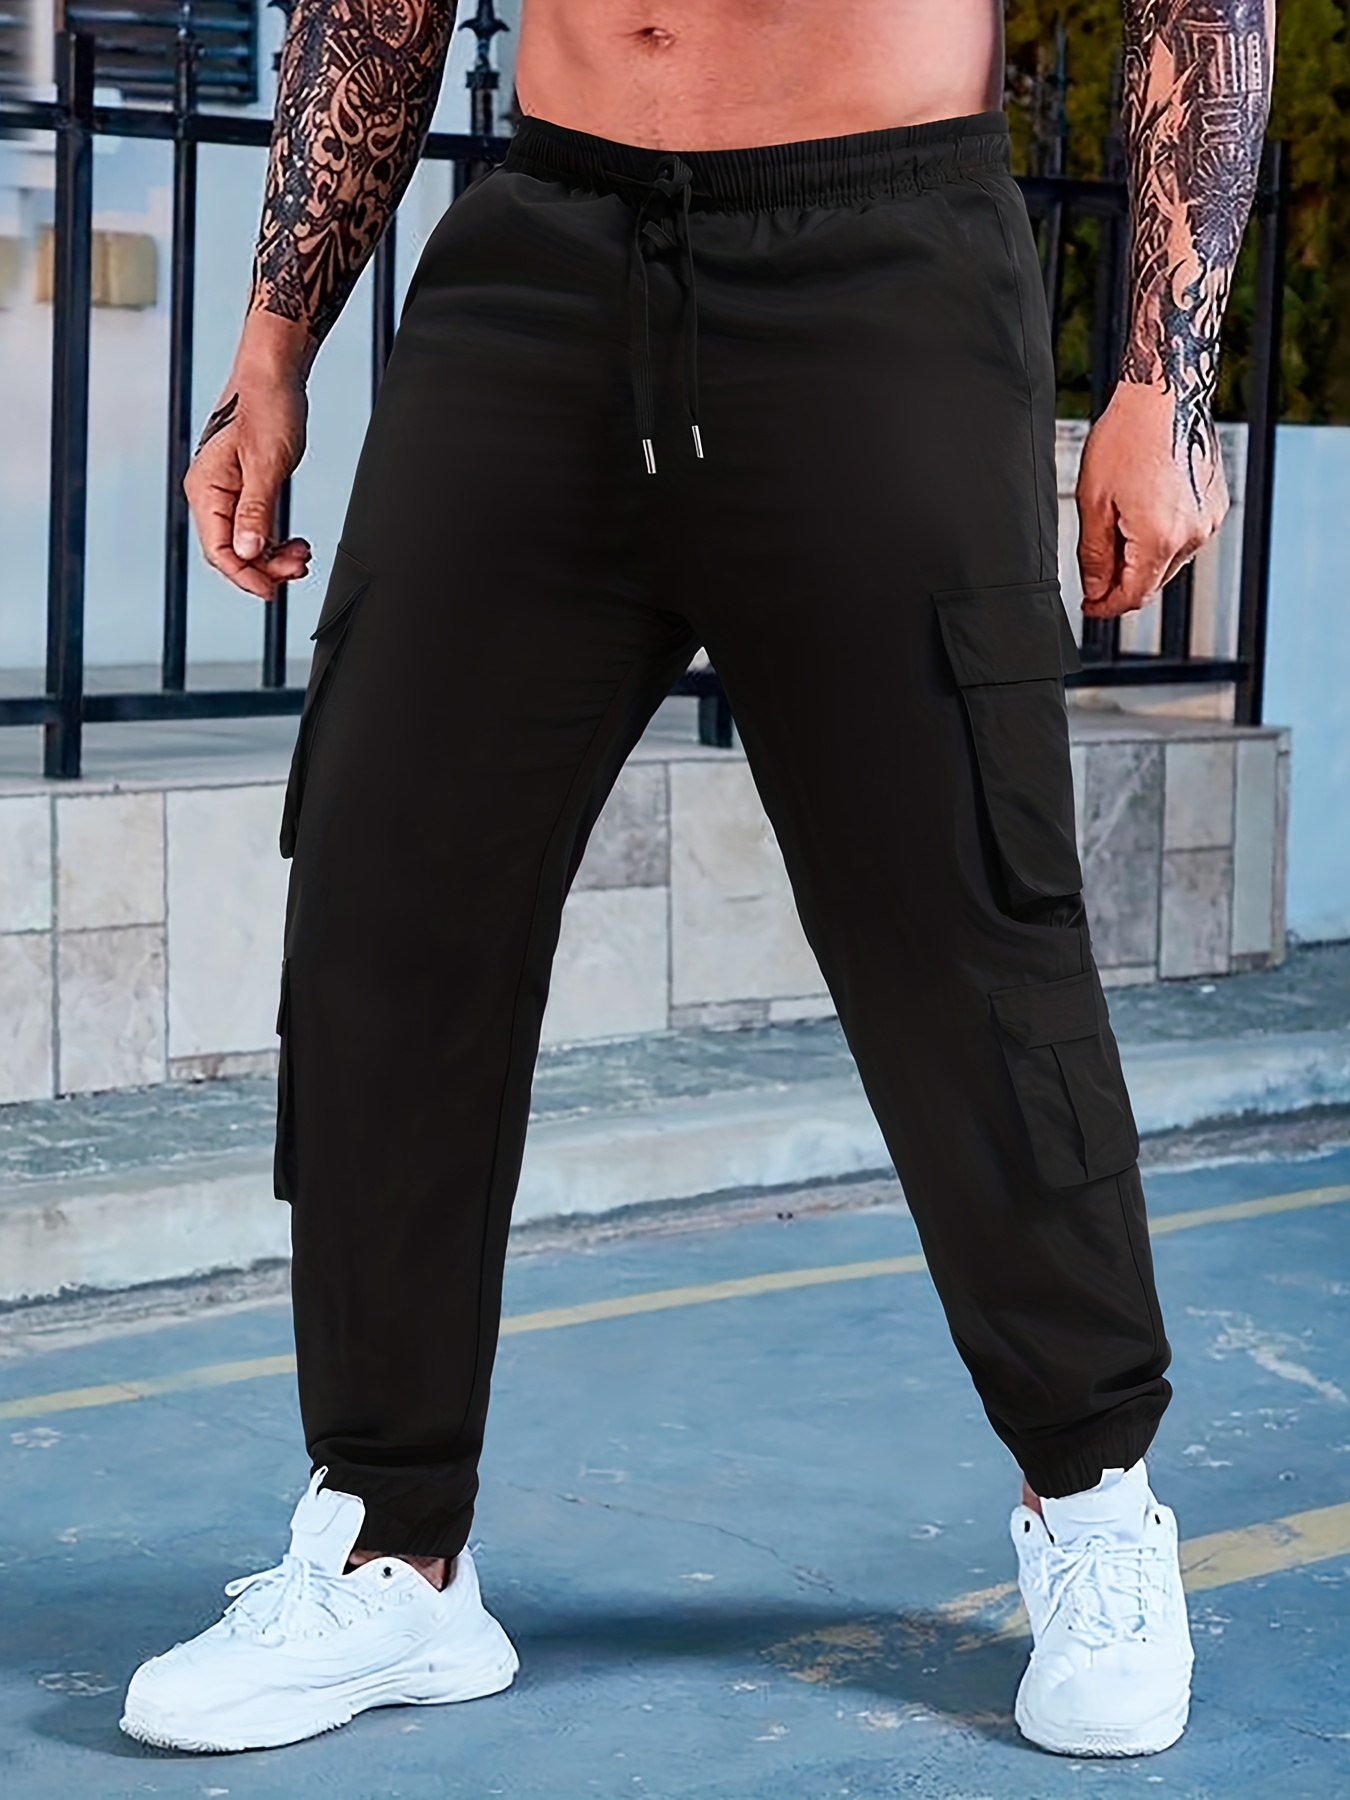 Men Cargo Pants Loose Elastic Waist Oversized Khakis Trousers Multi Pocket  Grey